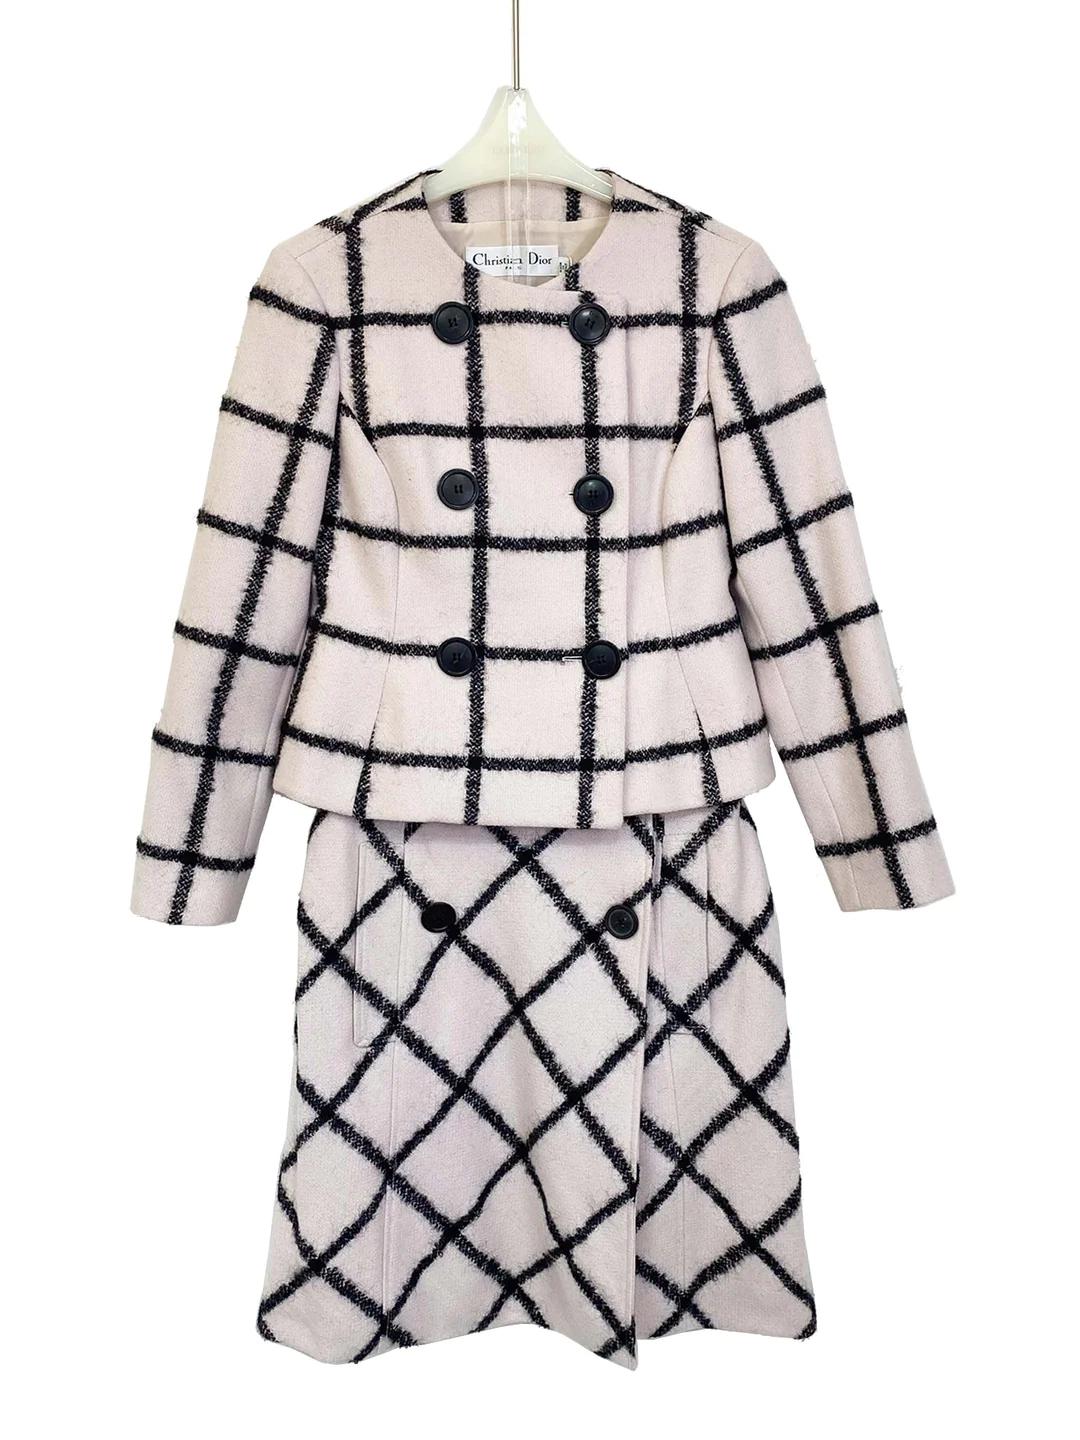 Christian Dior Wool Jacket & Skirt Set For Sale 2